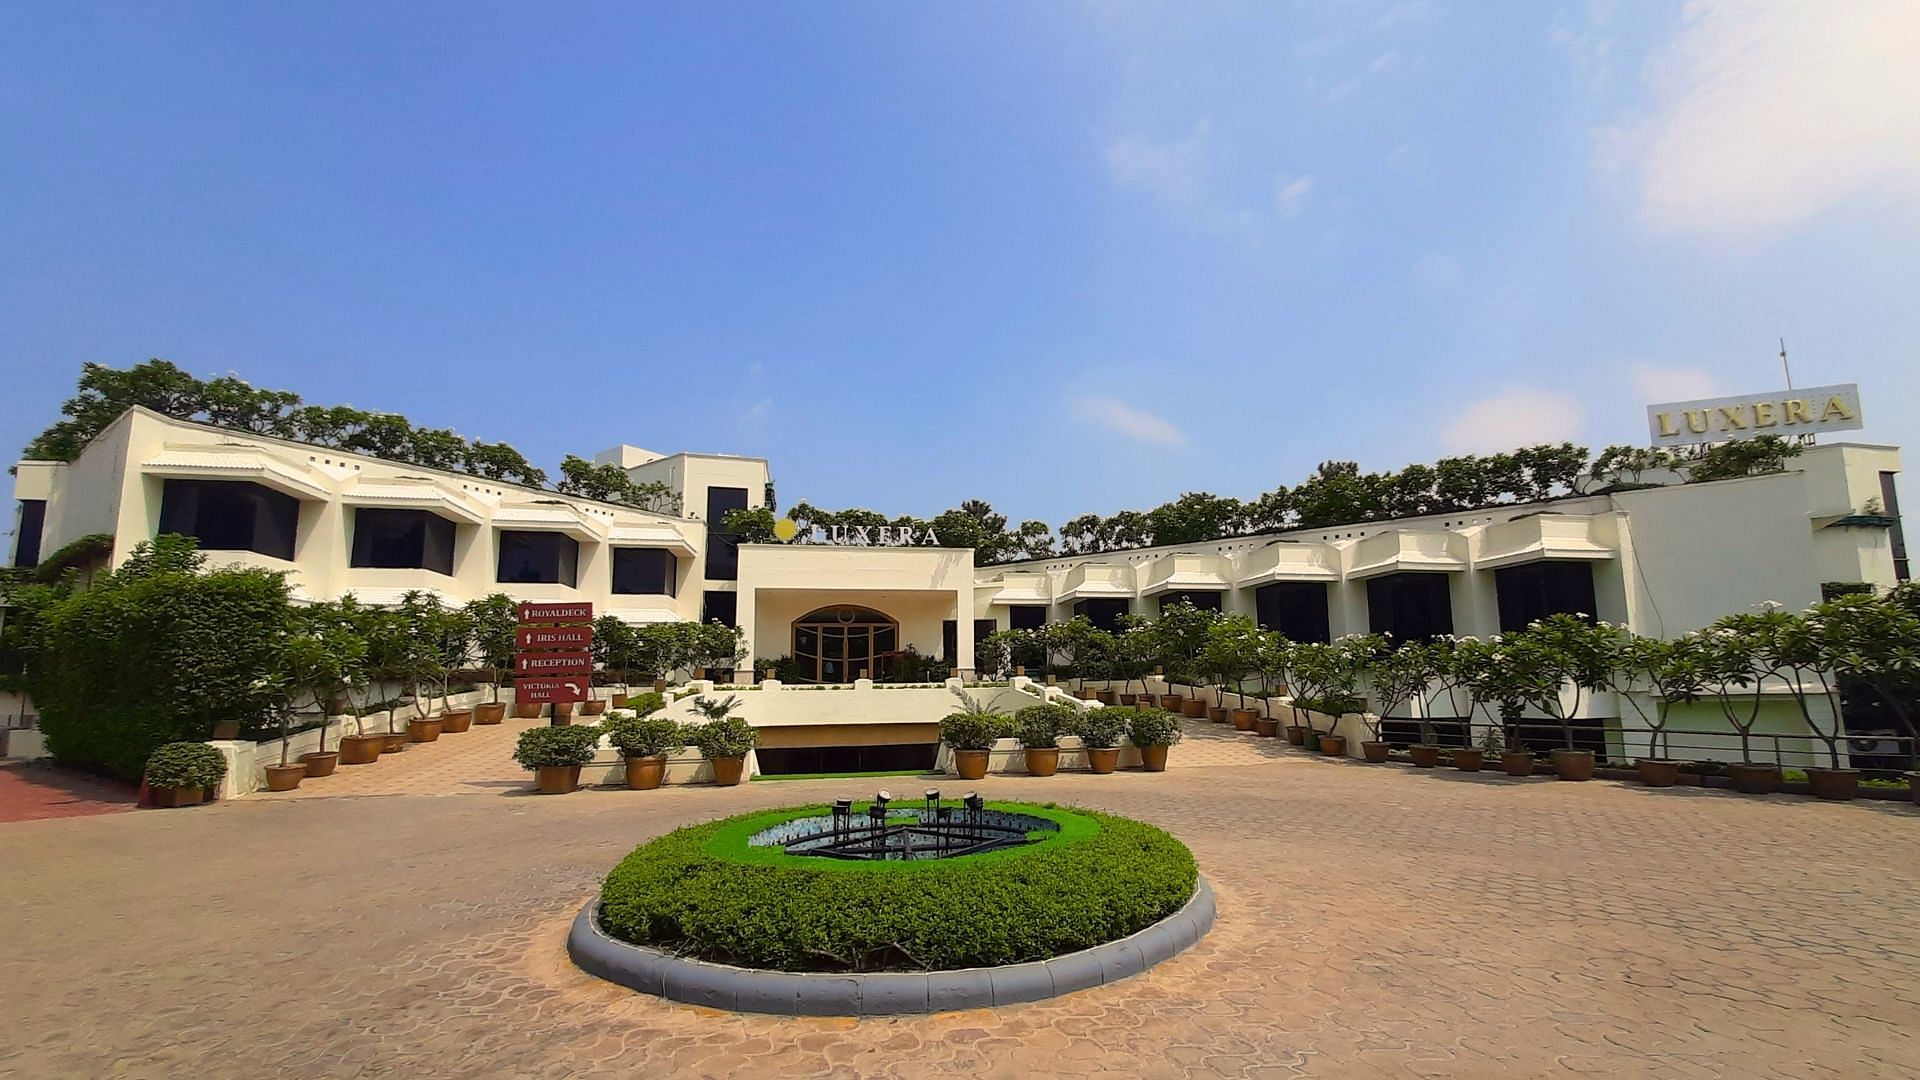 Luxera Hotel in Aaya Nagar, Delhi